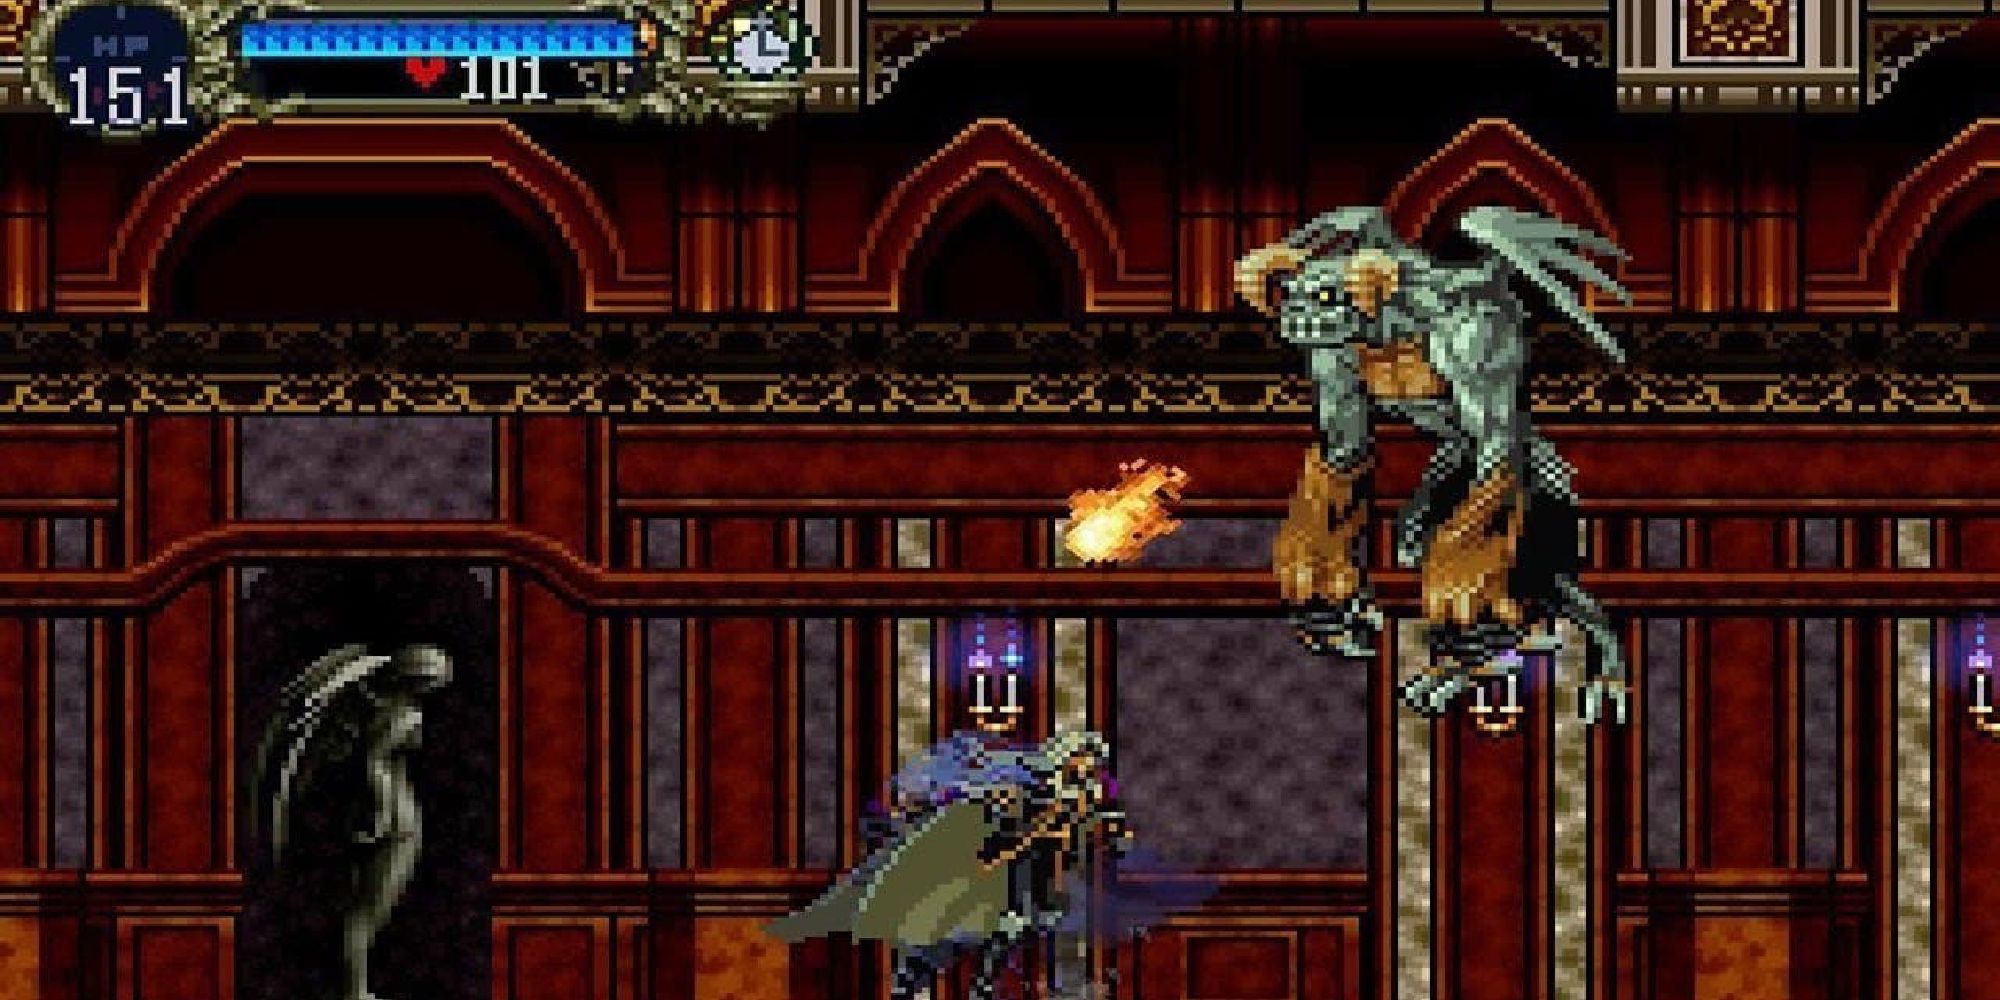 Alucard exploring inside Dracula's castle, fighting off against a winged demonic beast. 